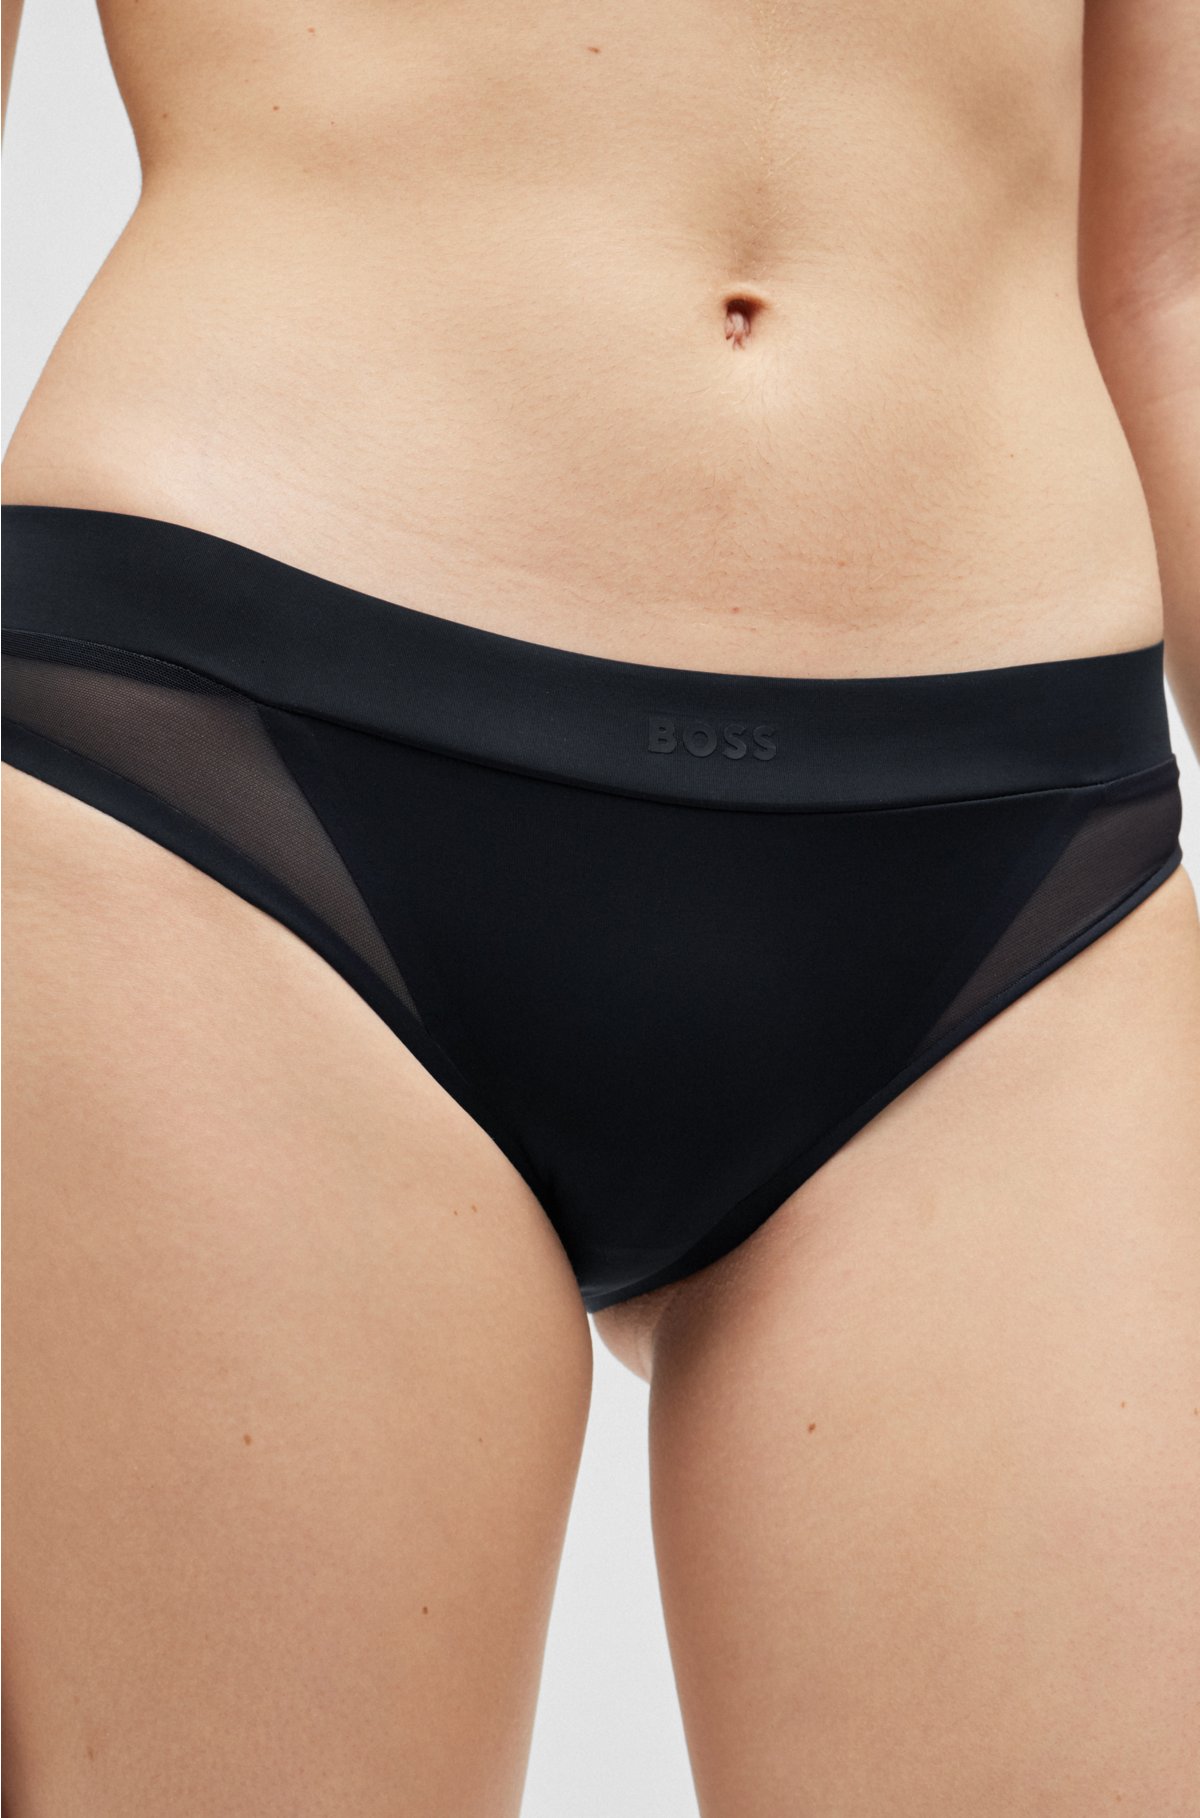 Calvin Klein Underwear Logo Waistband Bikini Briefs